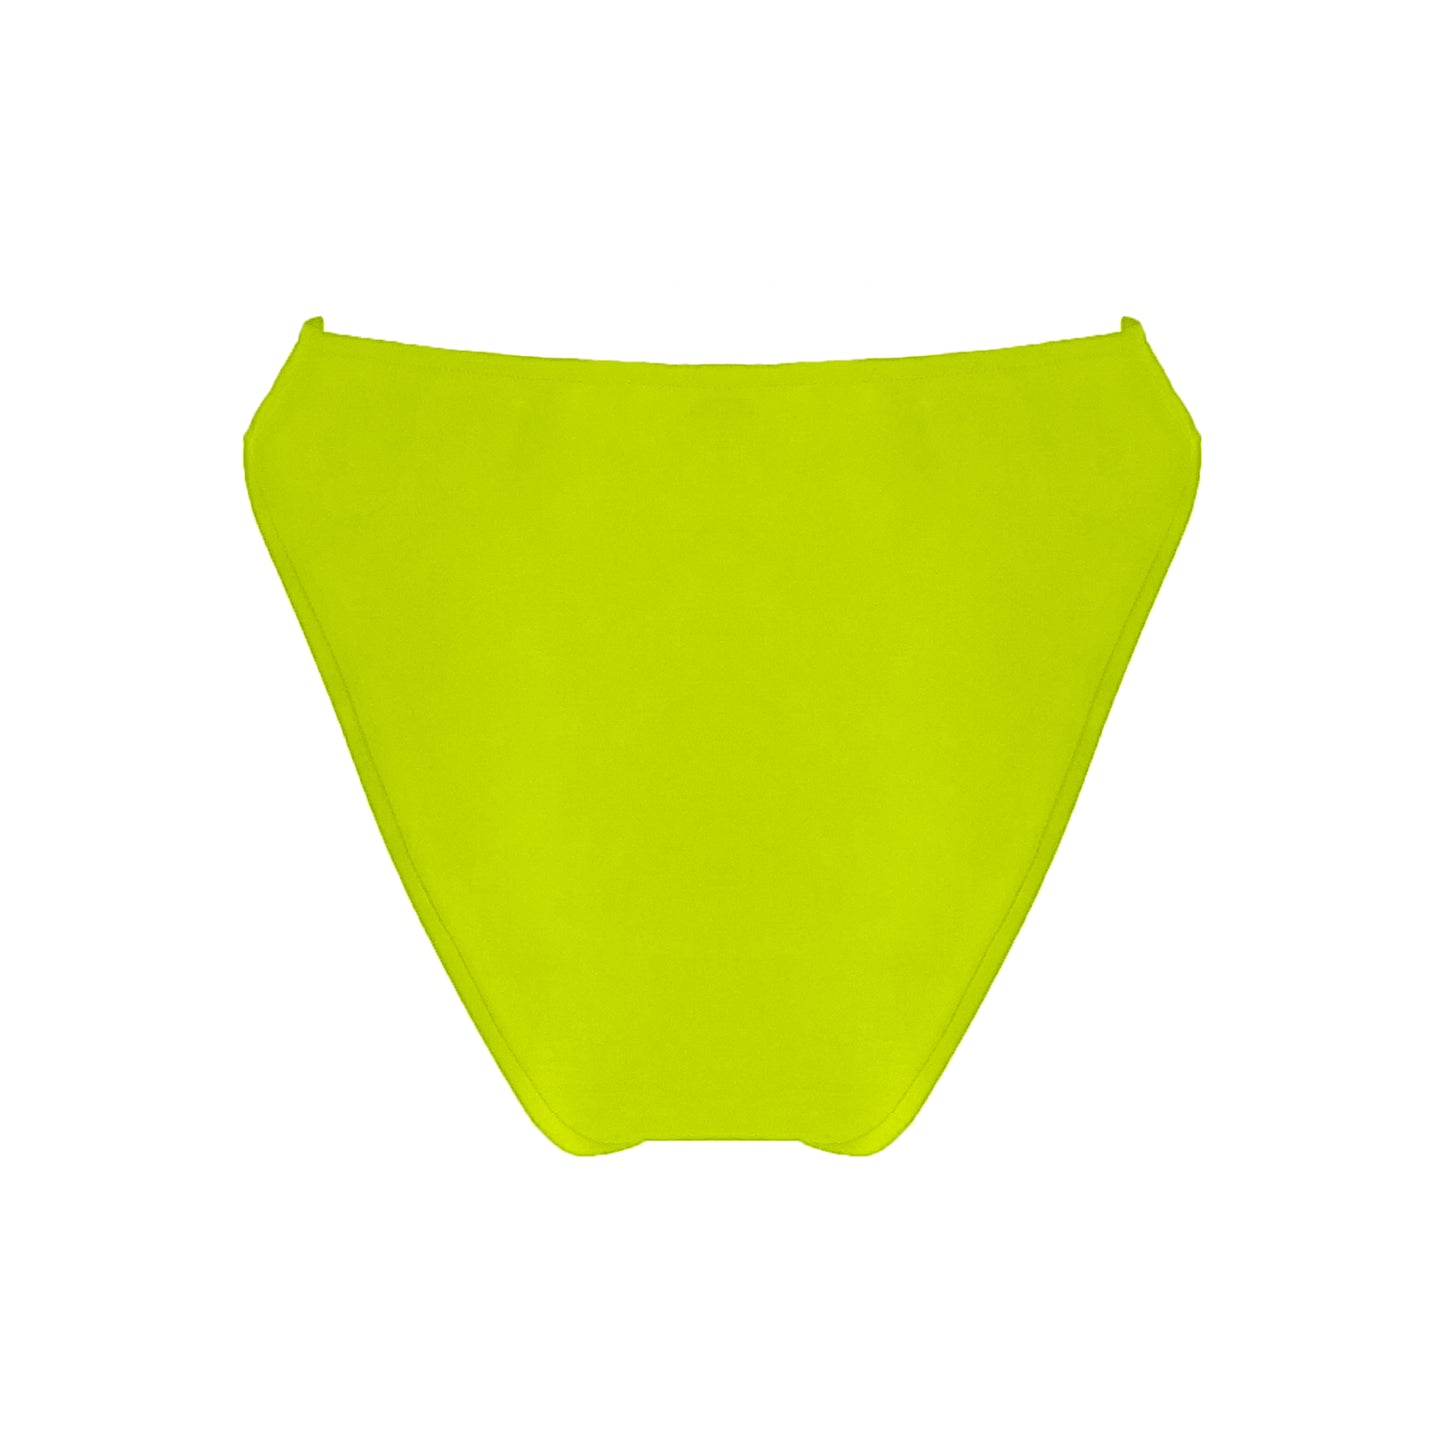 Back view of Bright yellow High waist bikini bottom with high cut legs and cheeky bum coverage.